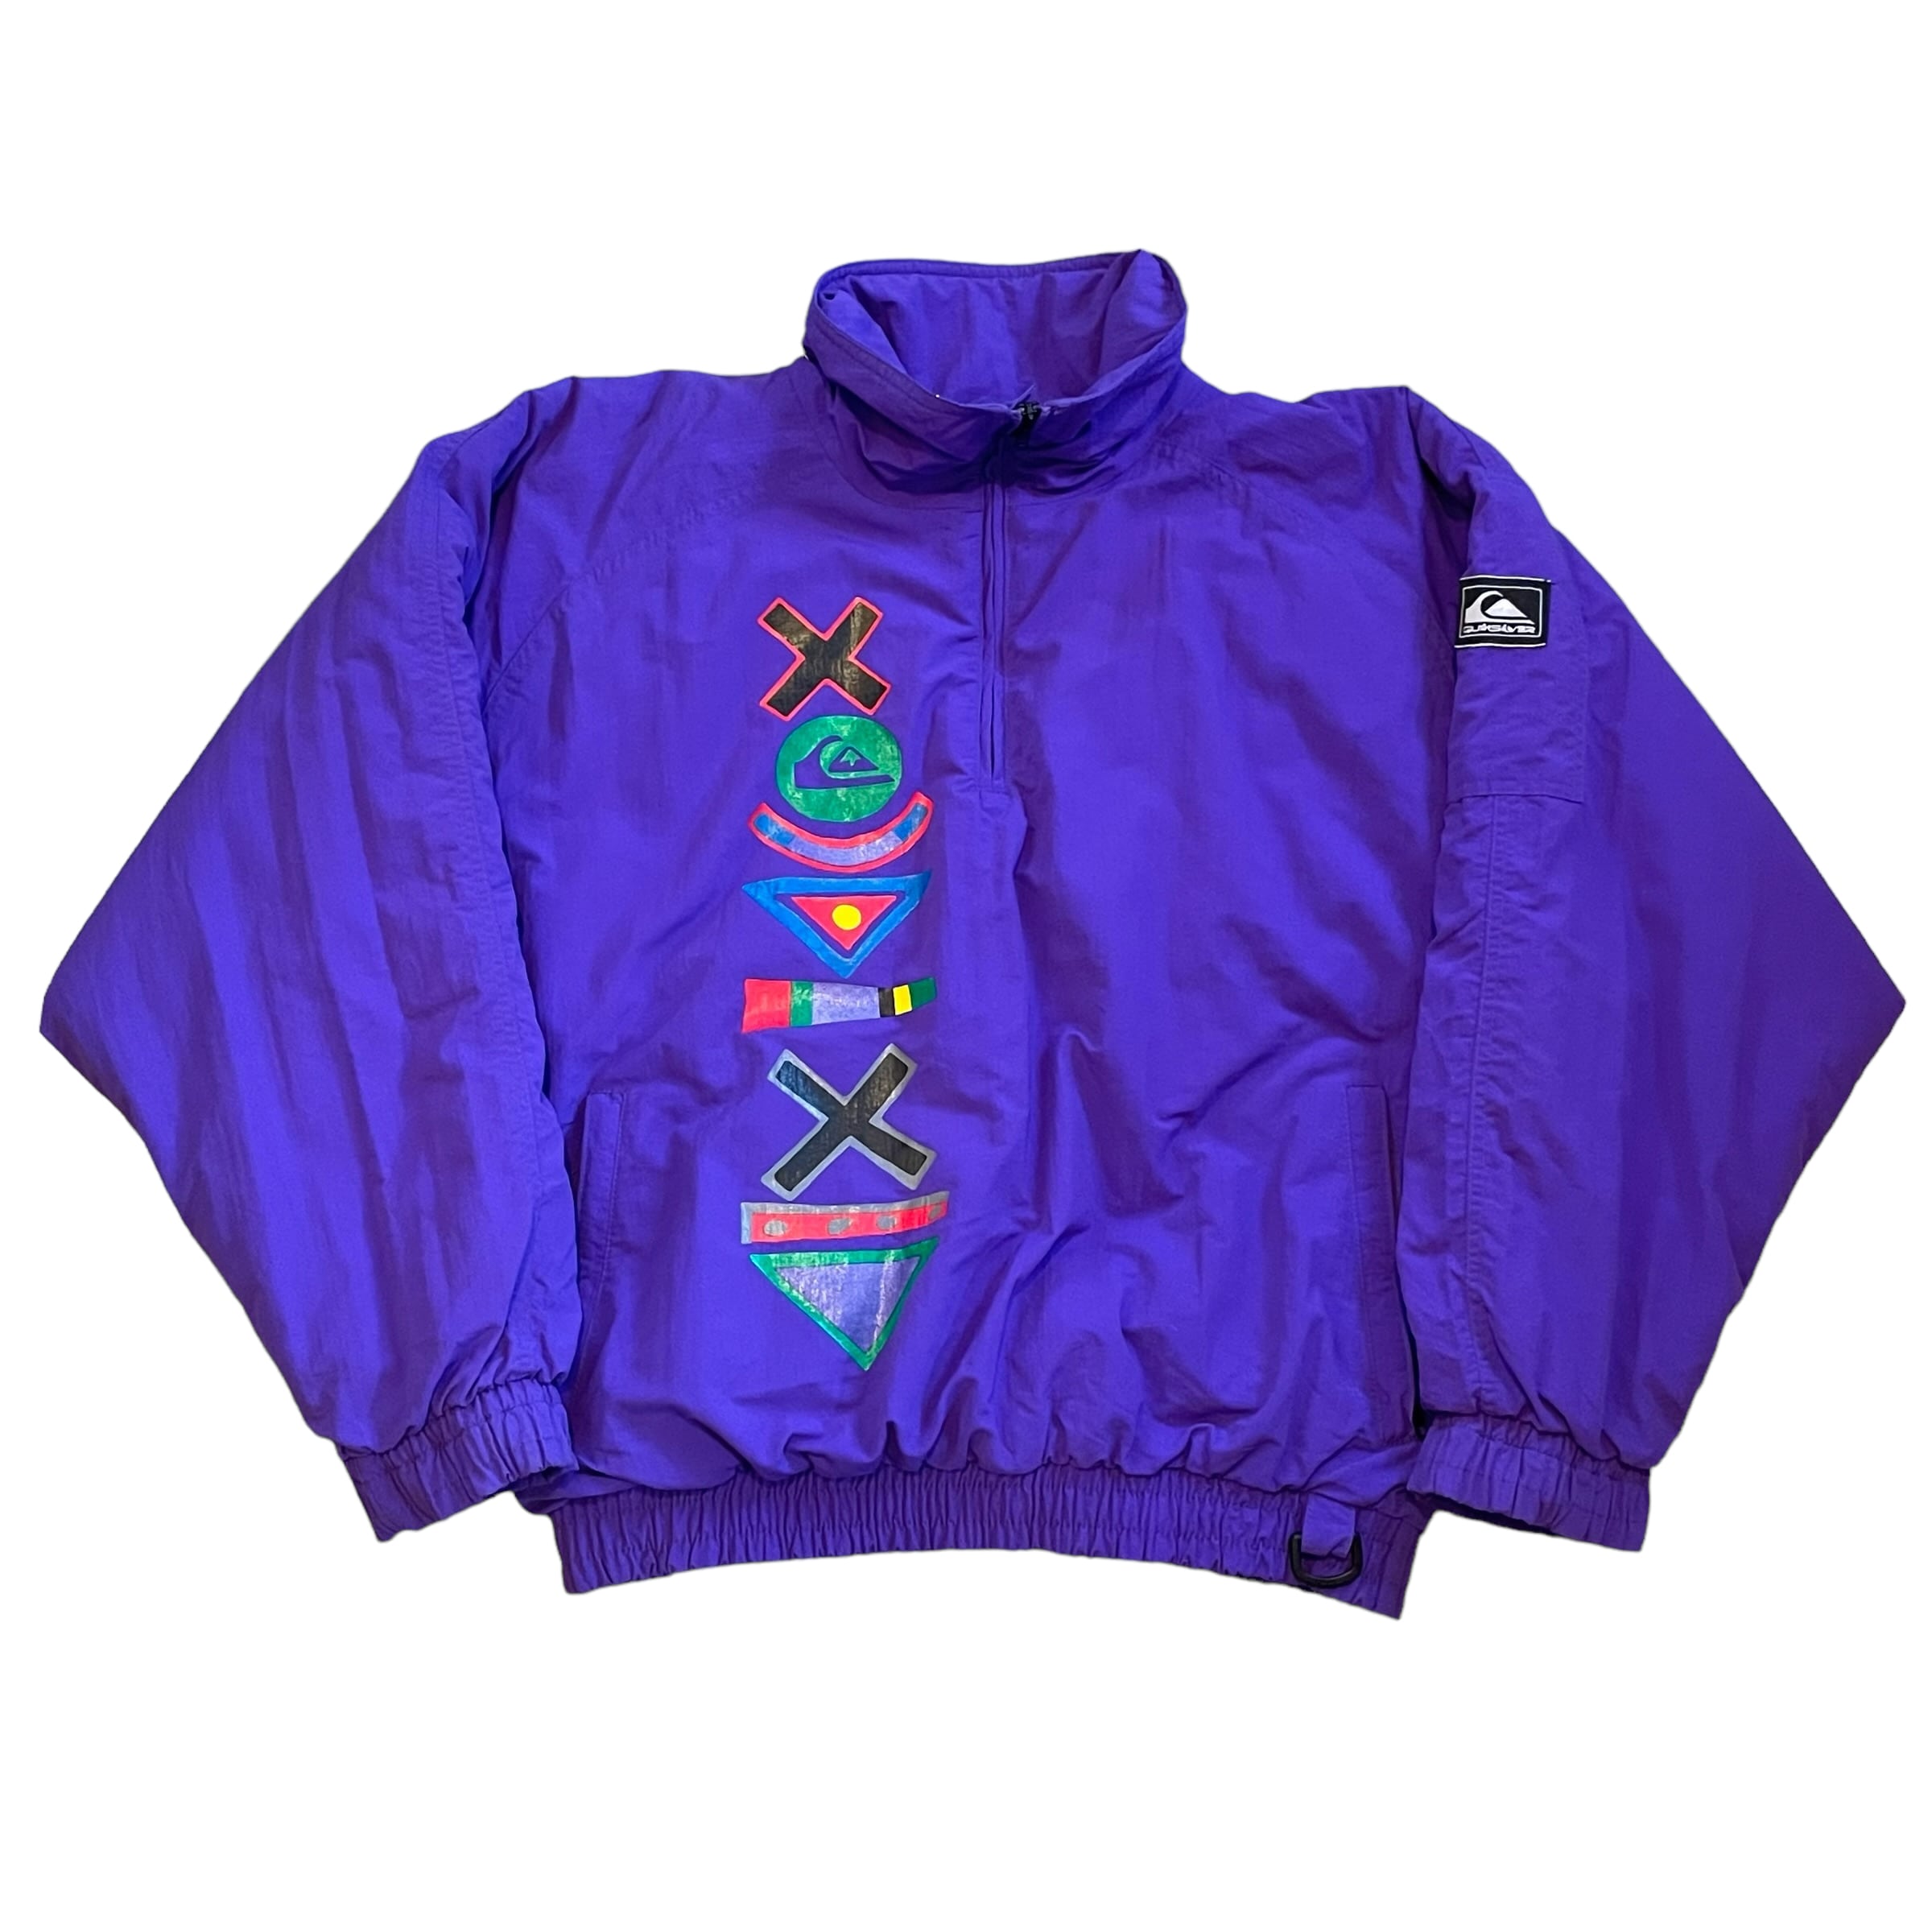 90s quicksilver nylon jacket